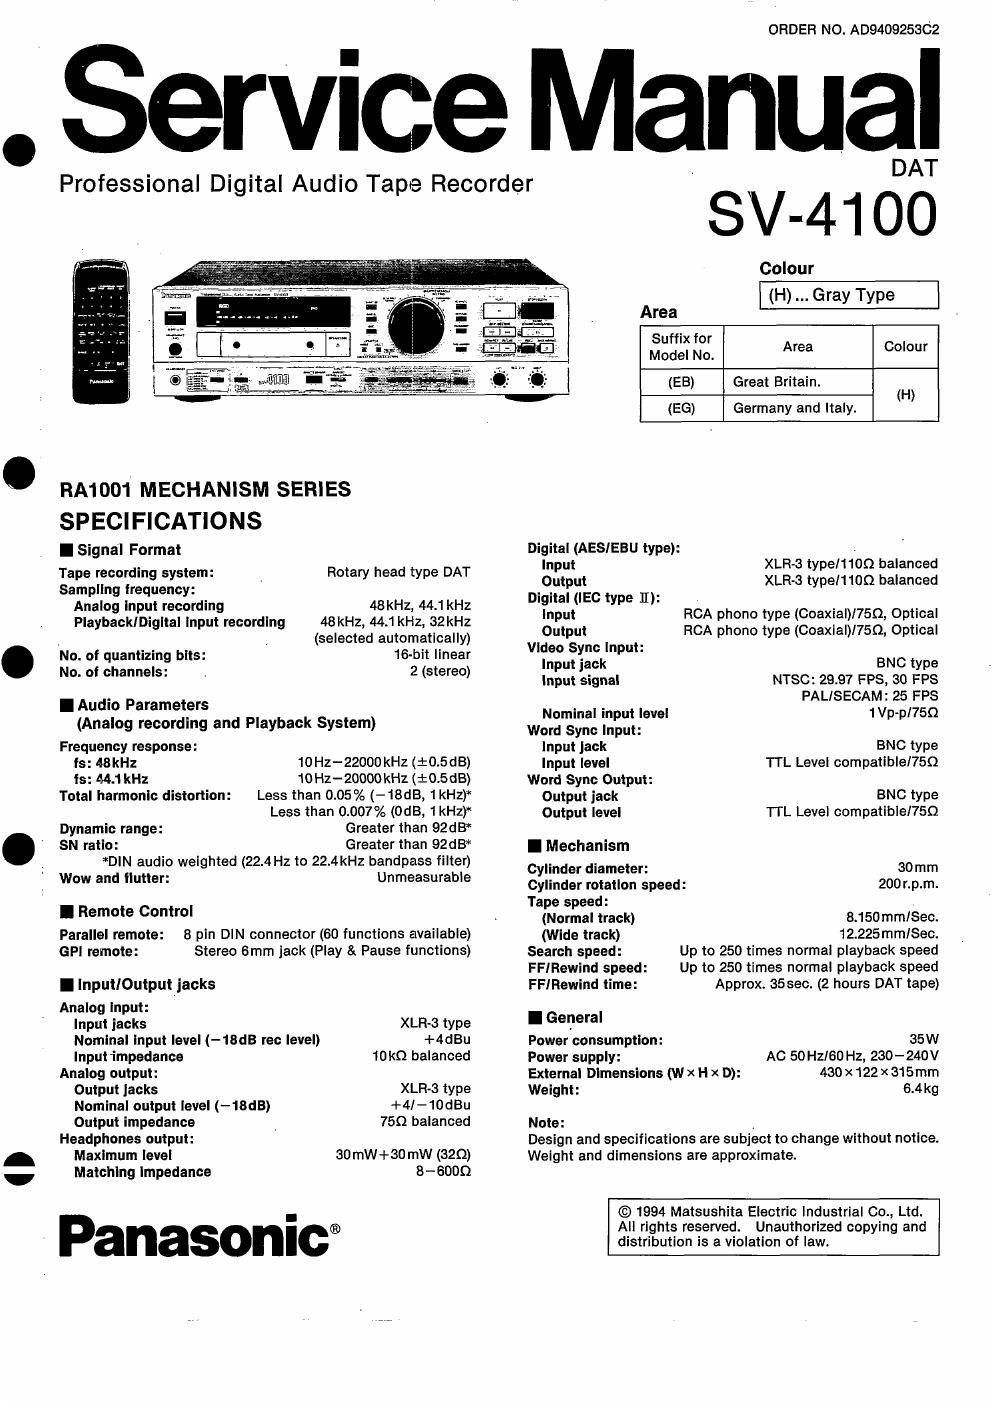 panasonic sv 4100 service manual